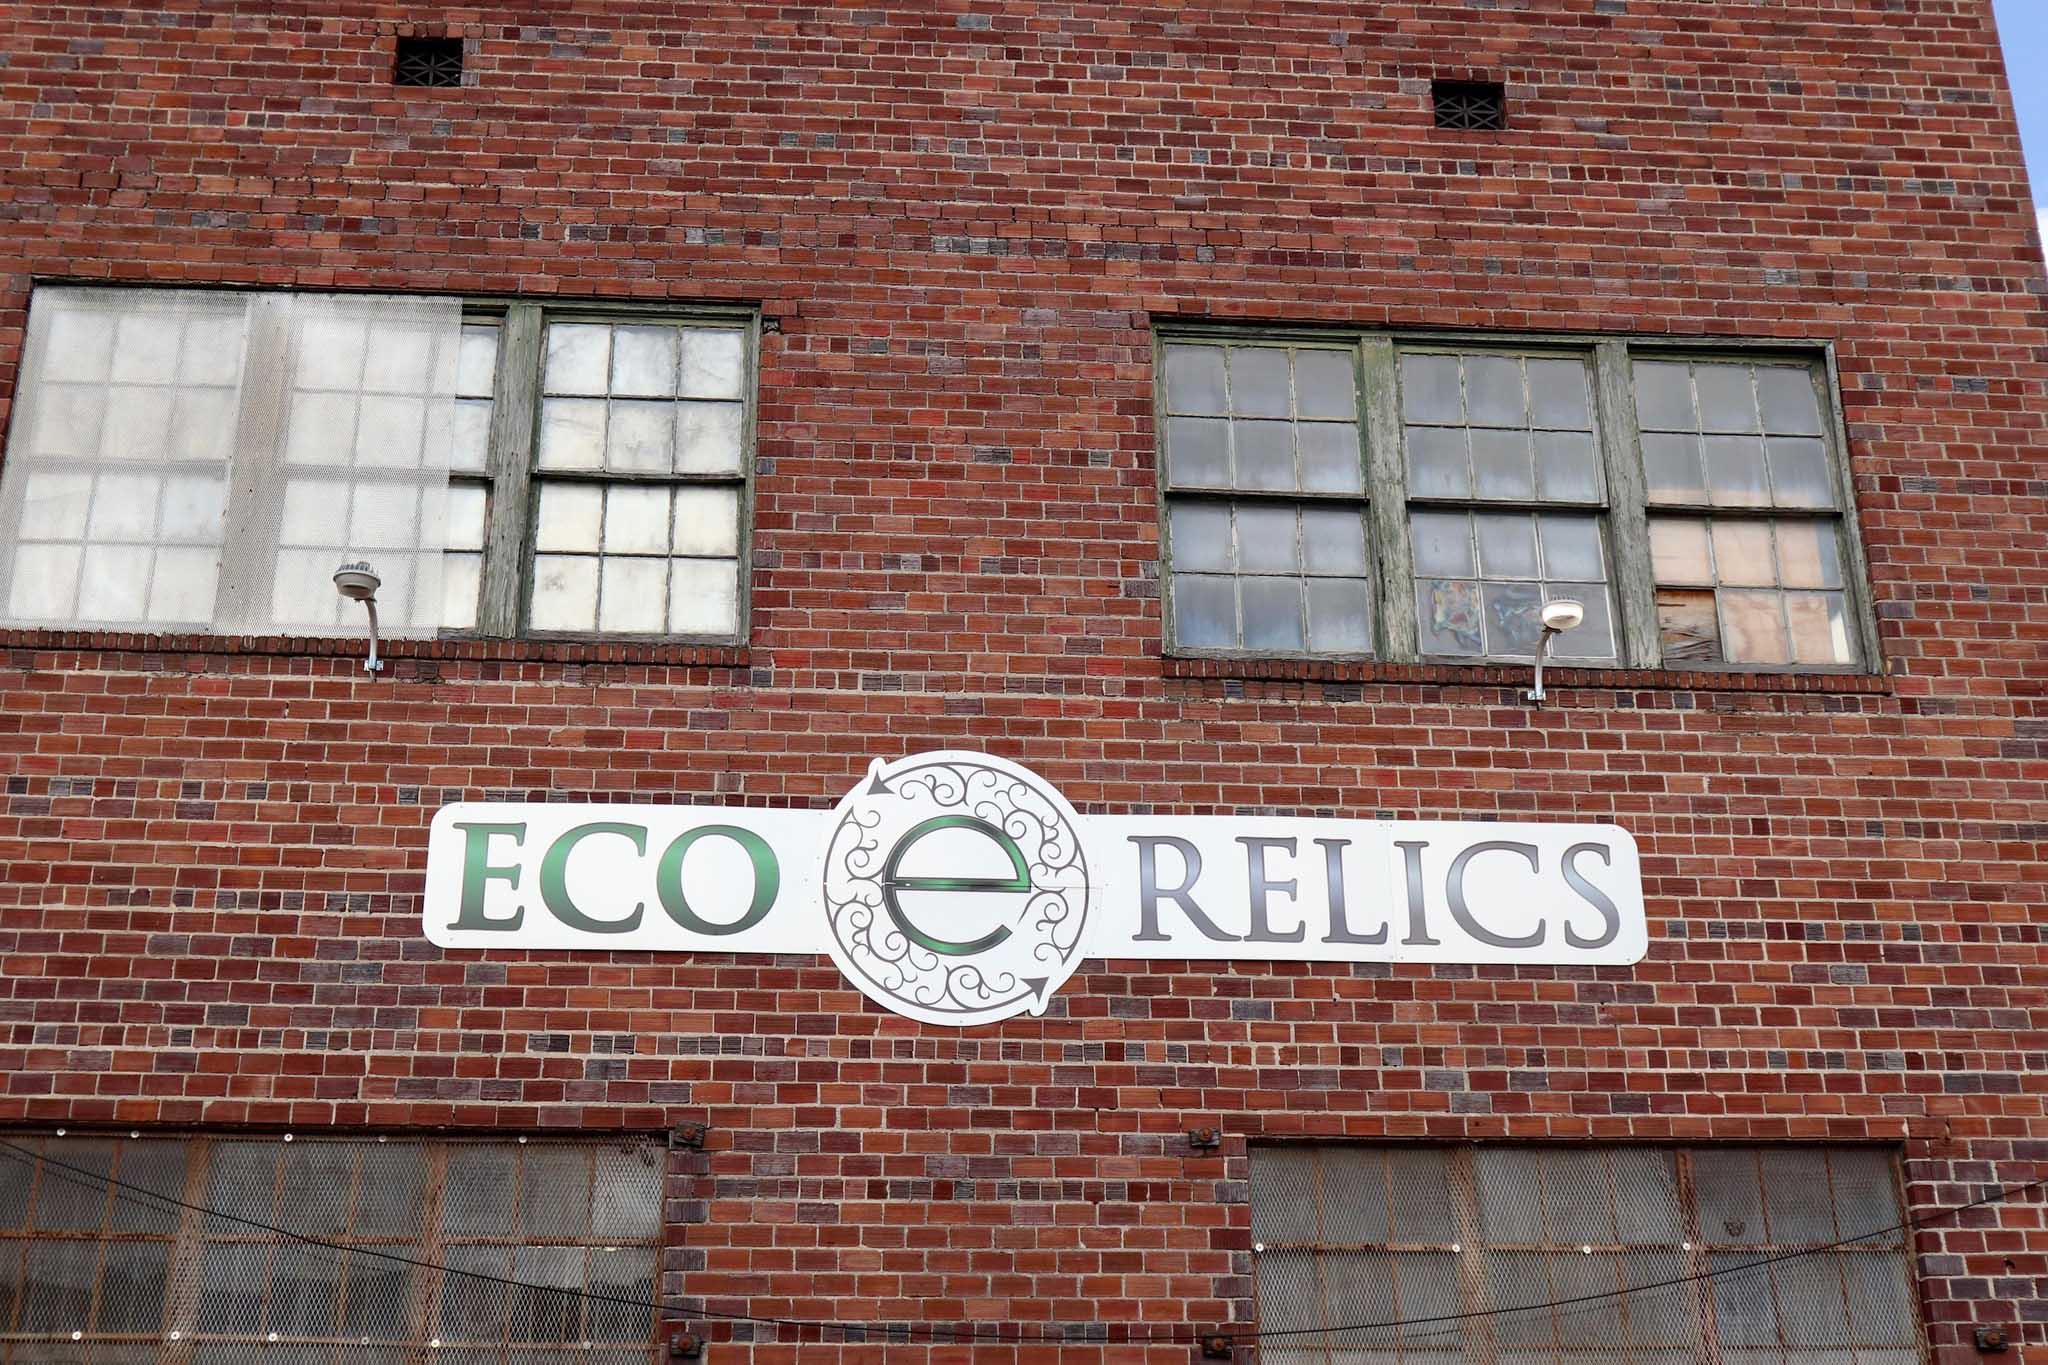 Eco Relics building exterior.